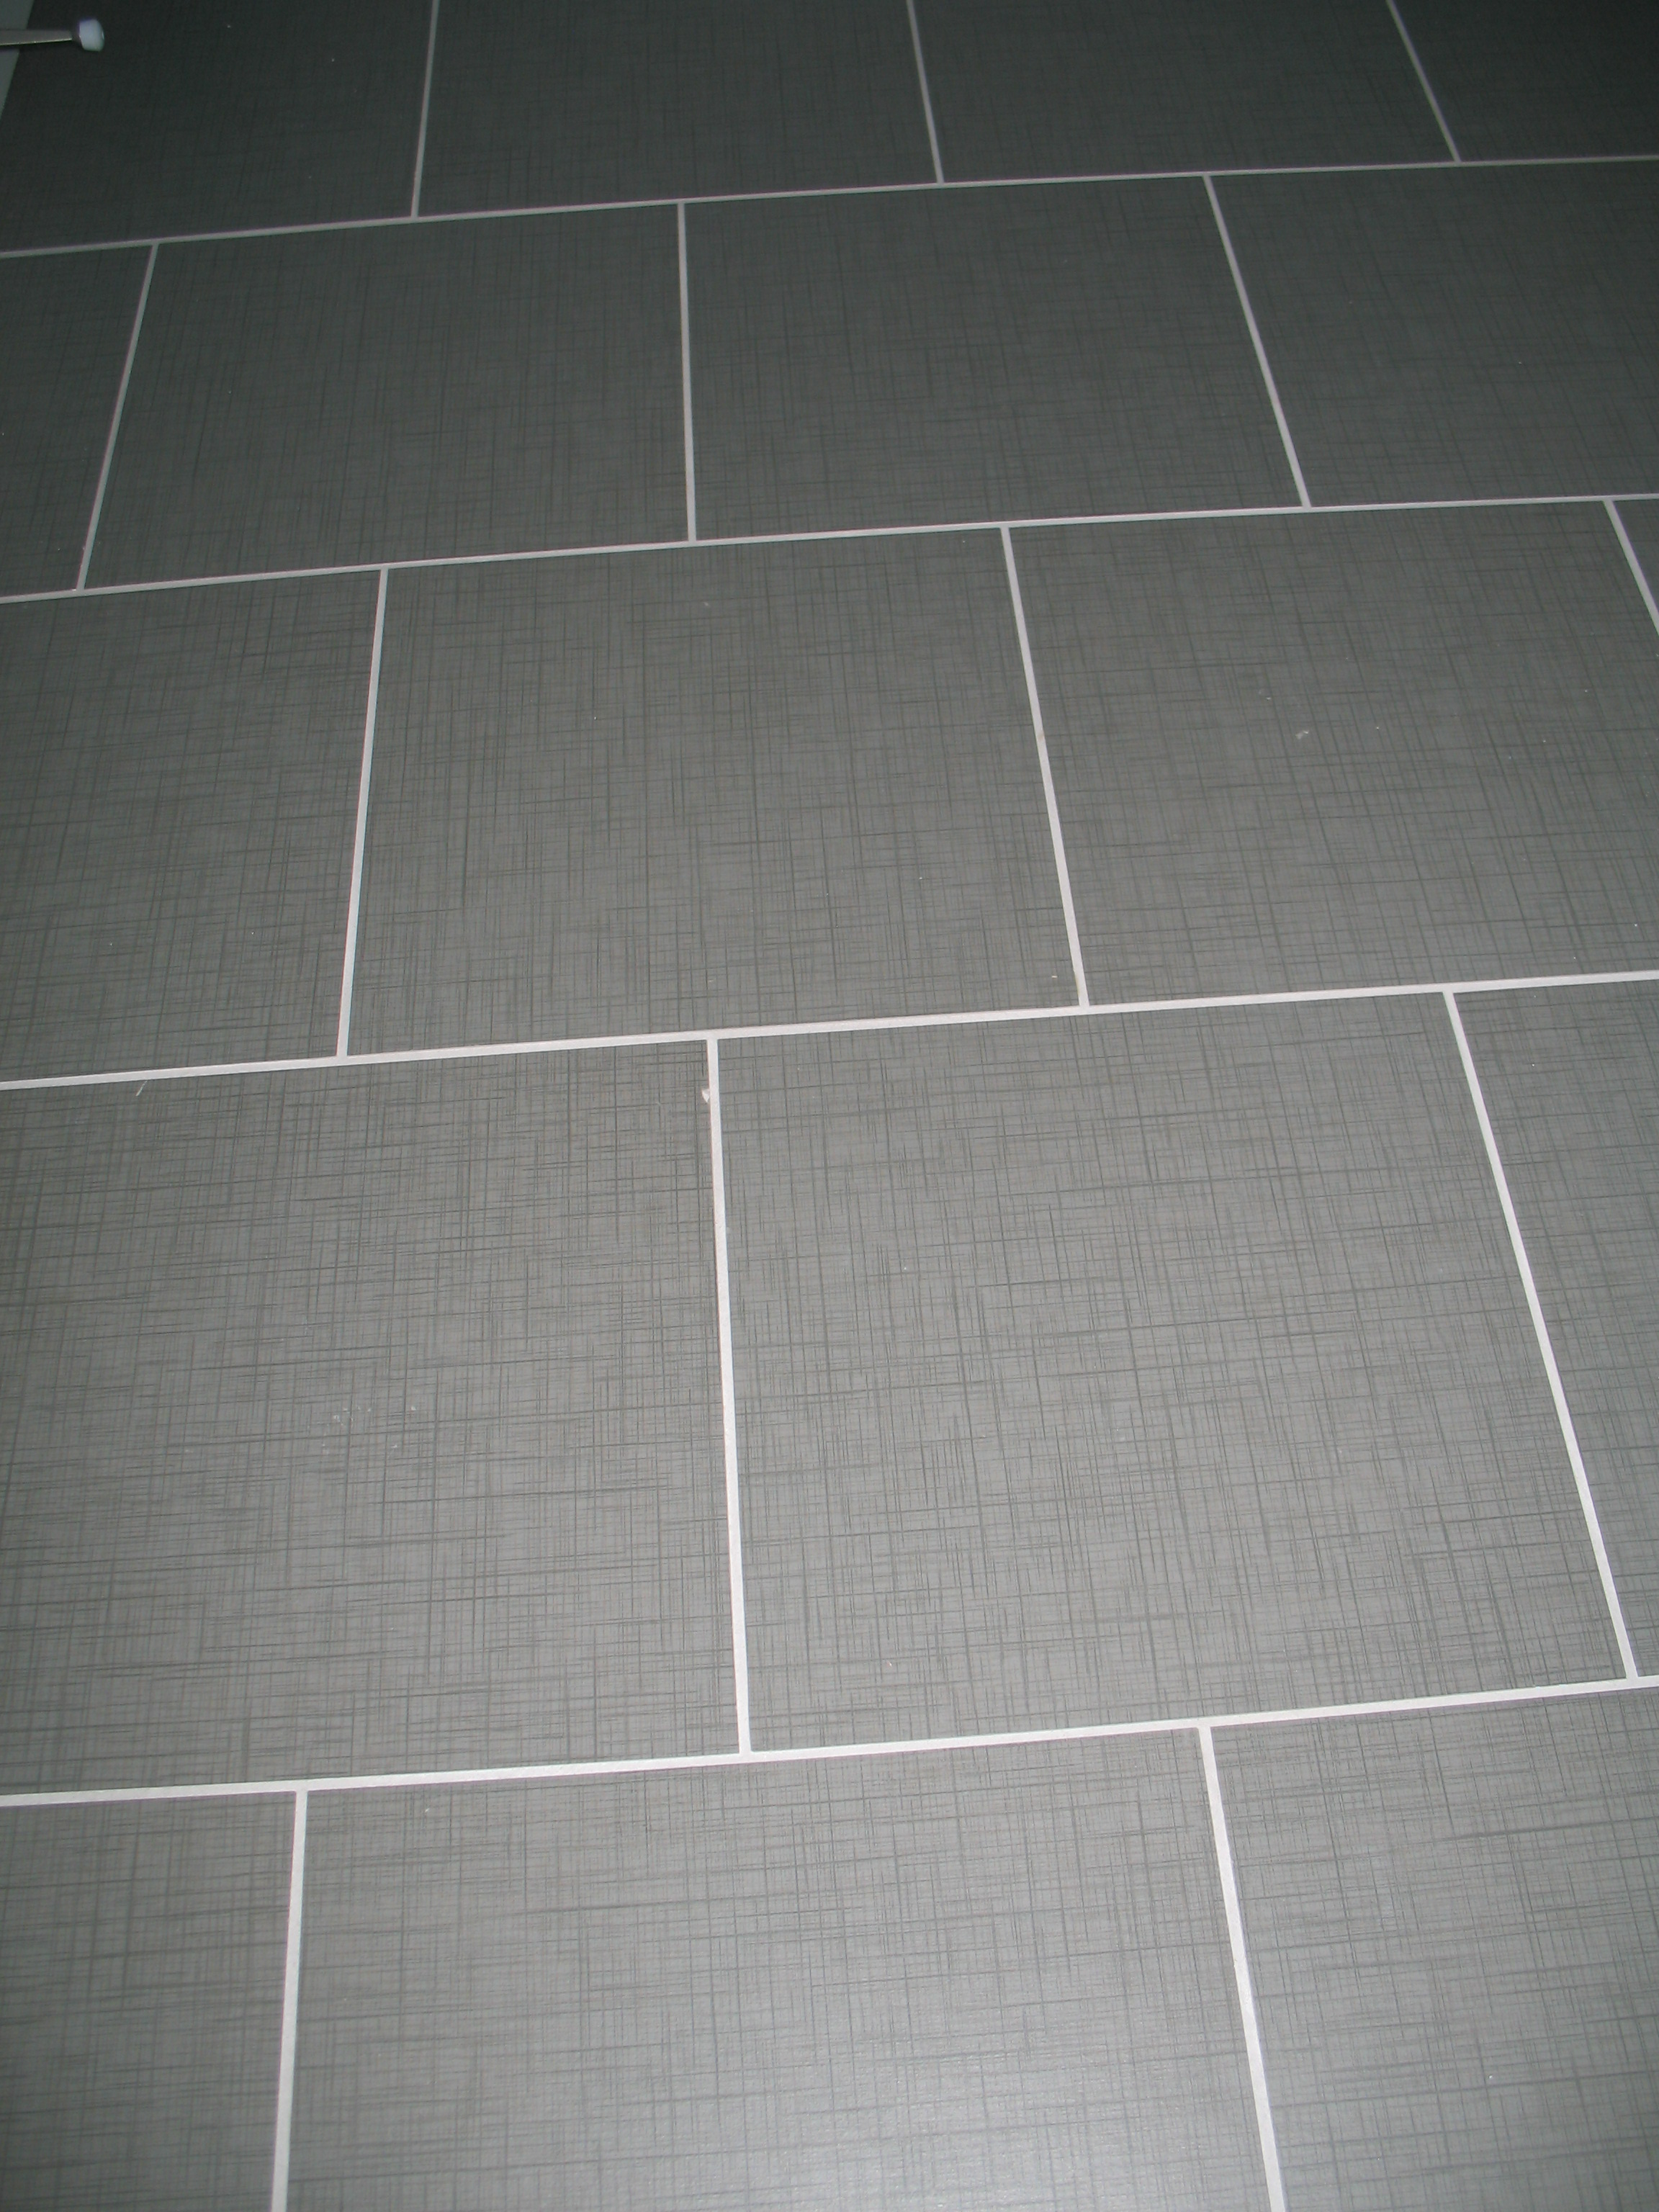 Brick Pattern Floor Tile Layout Carpet Vidalondon